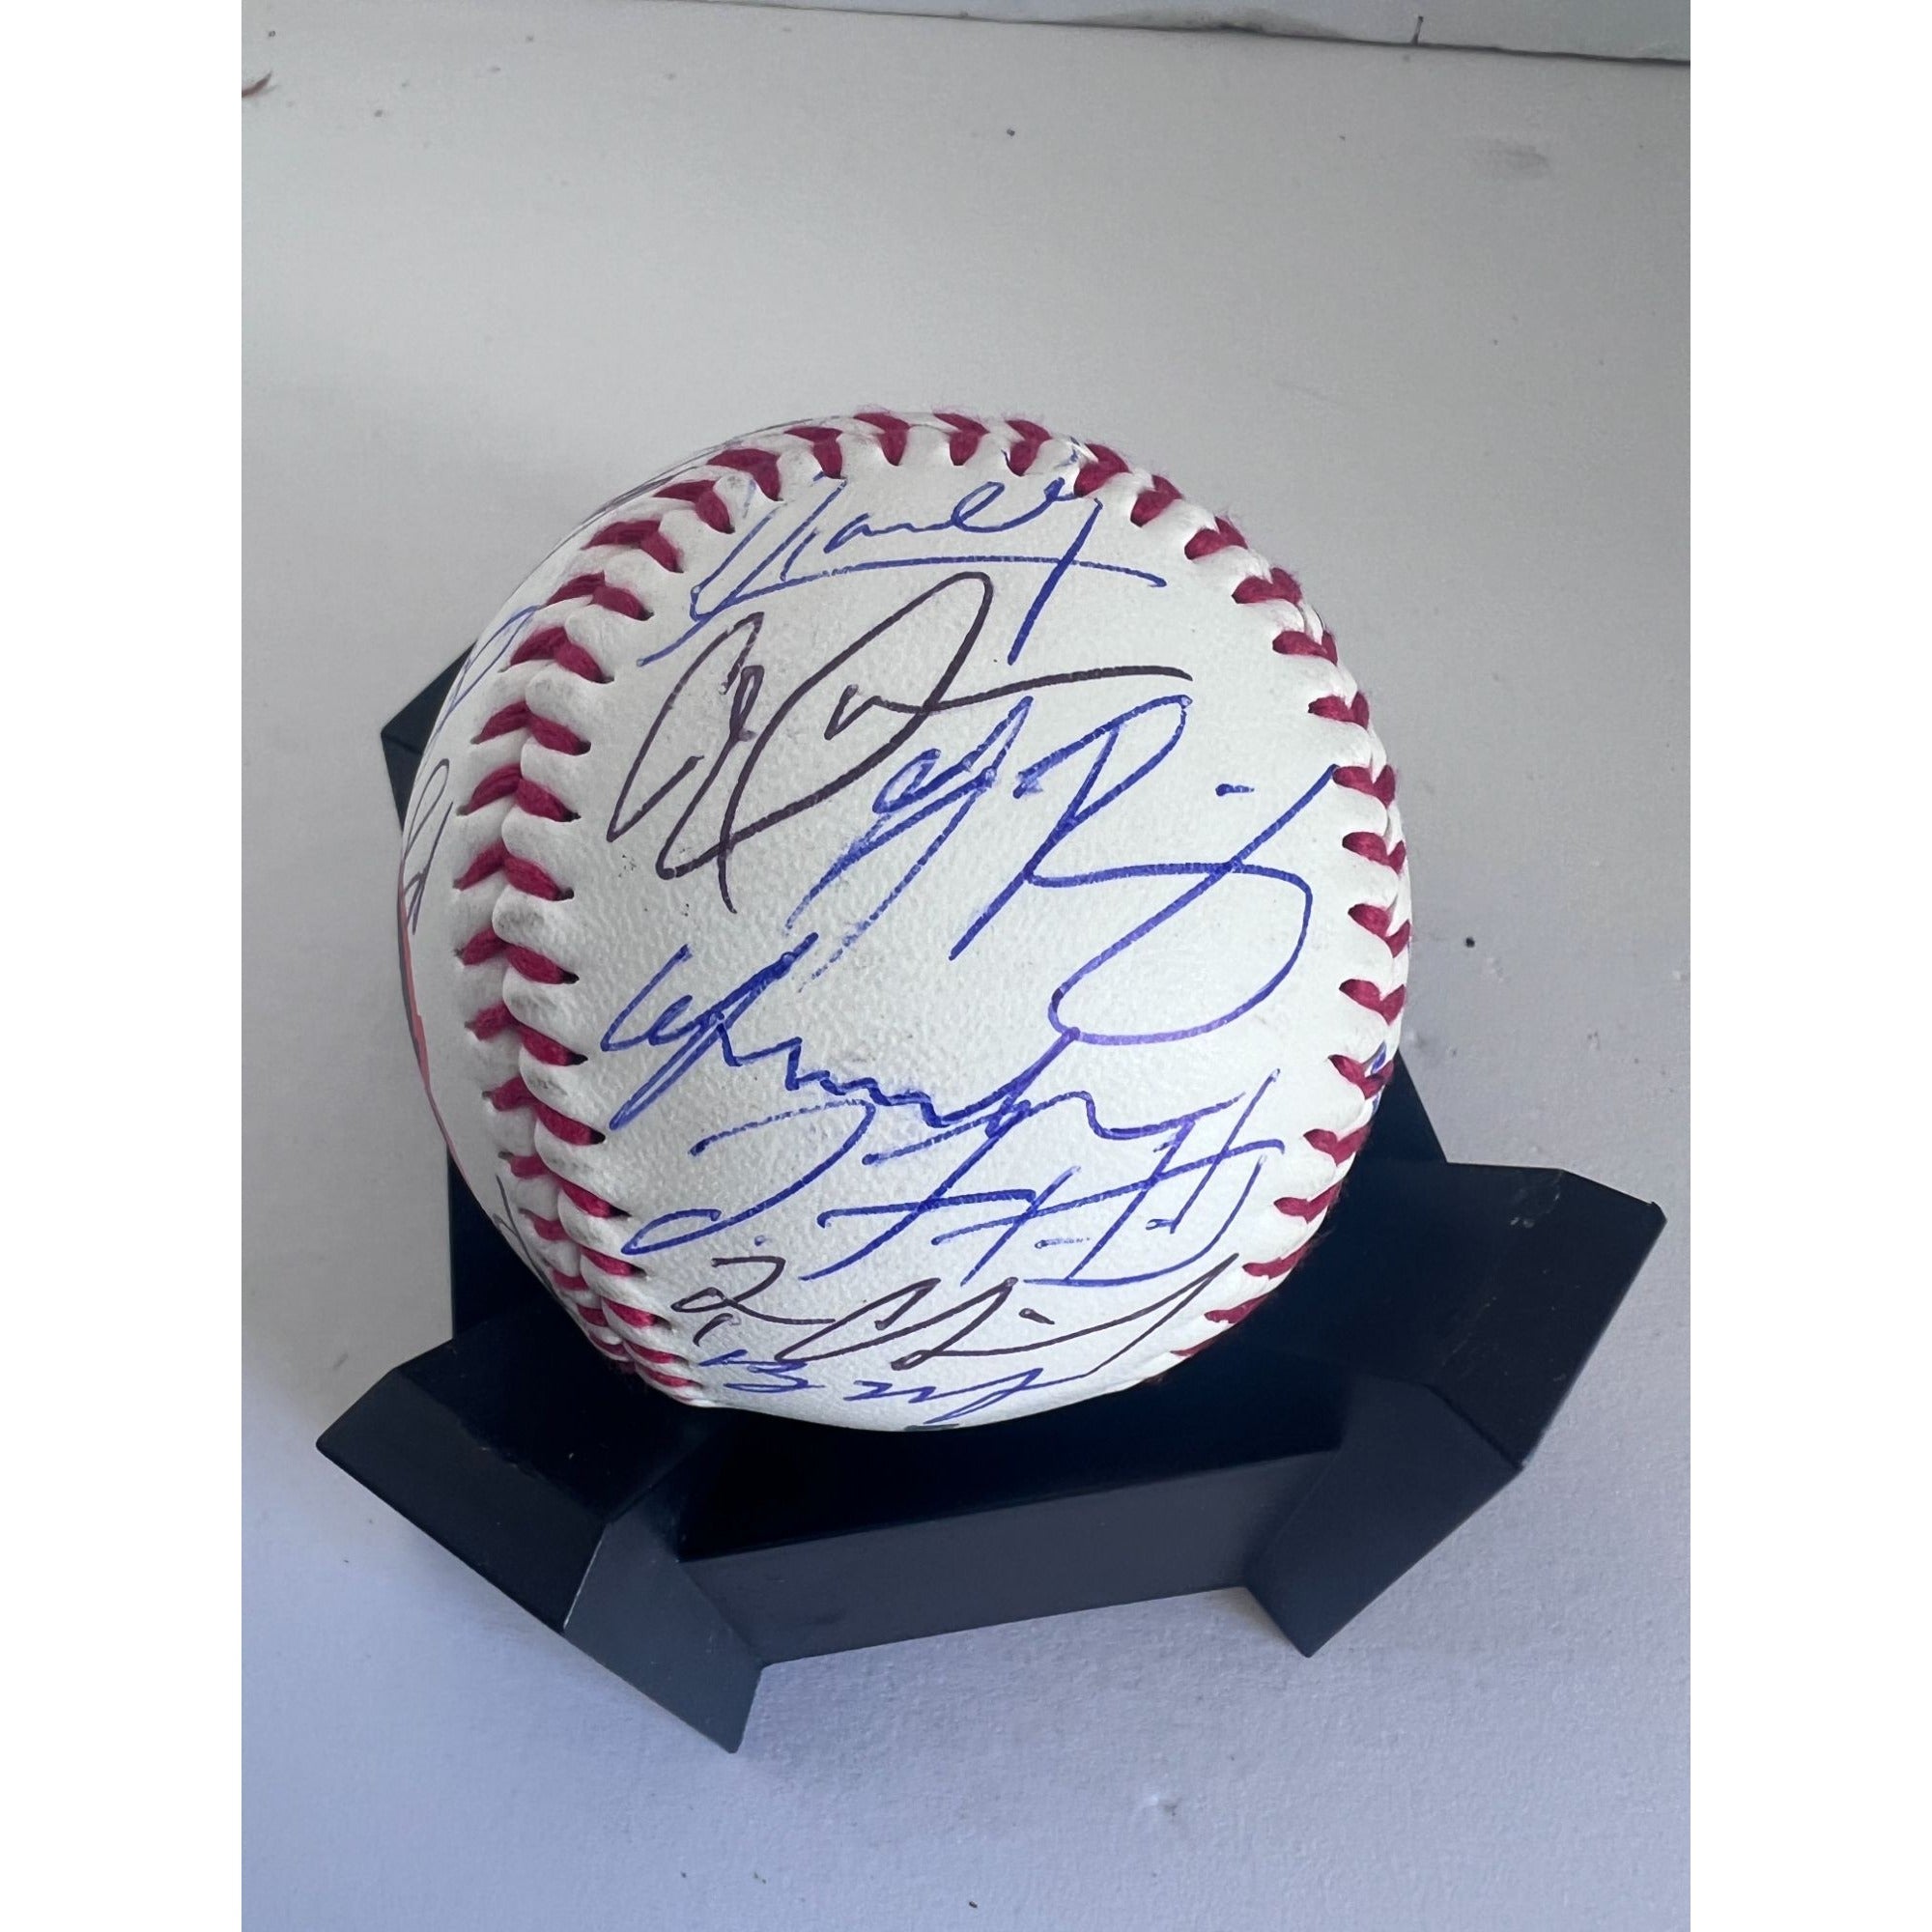 Adley Rutschman Autographed Baseball